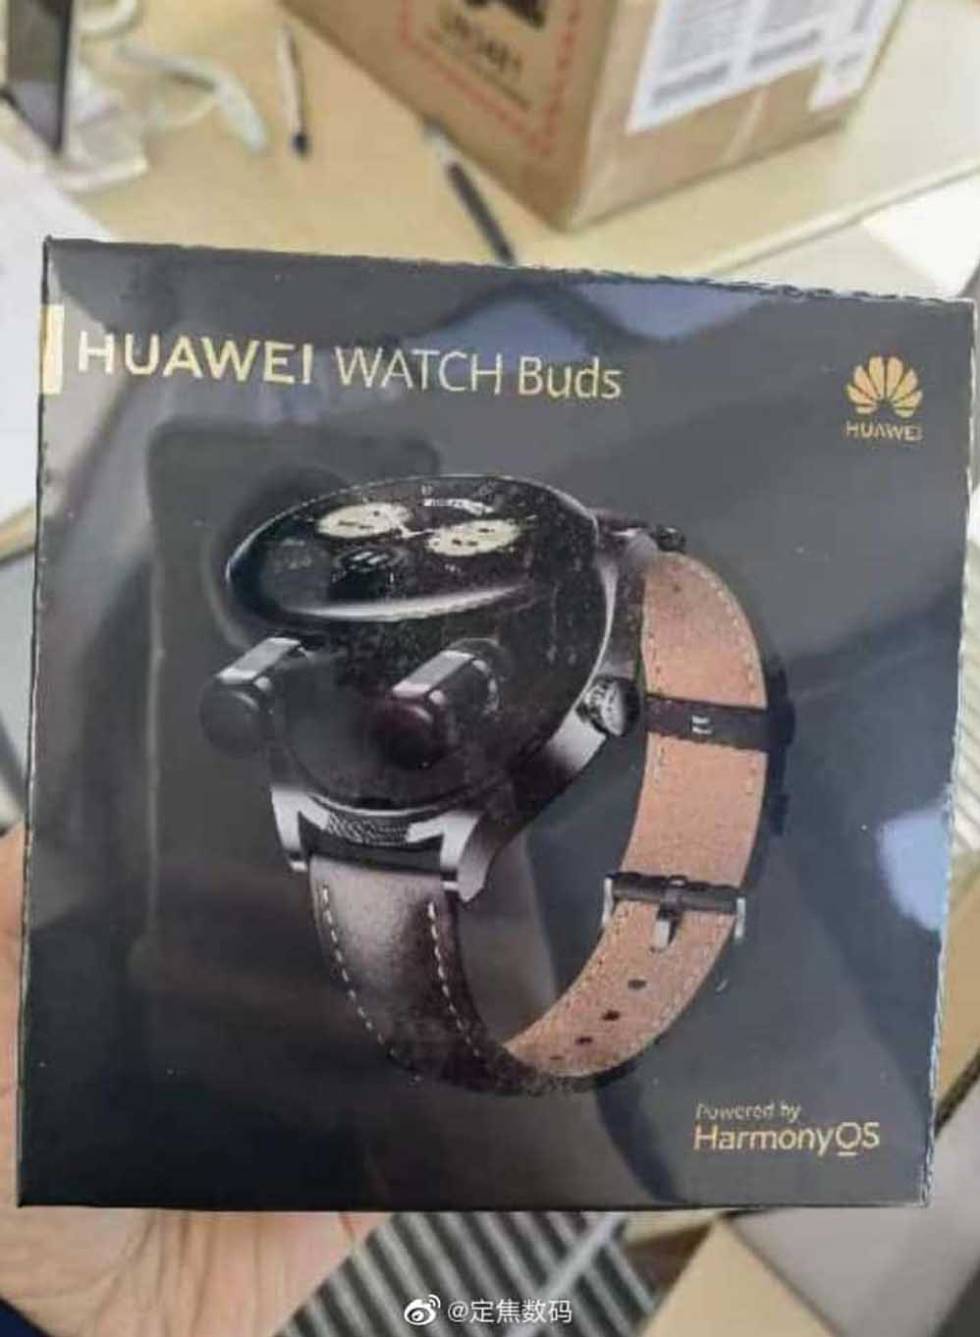 Possible Huawei Watch Buds